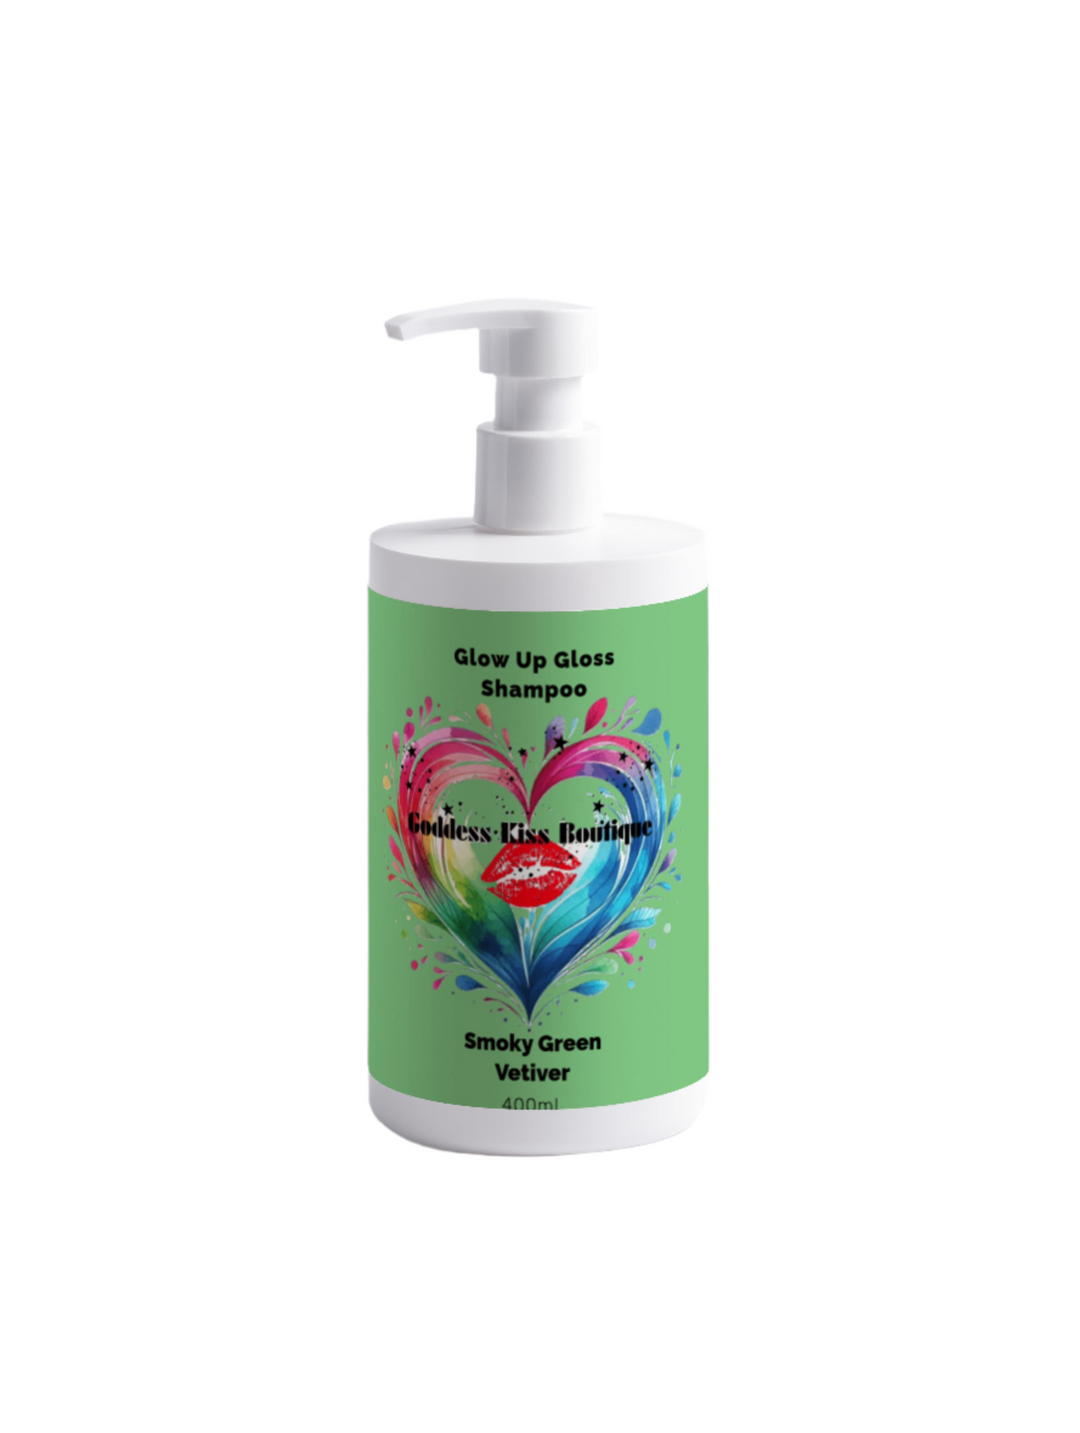 Glow Up Gloss Shampoo with Smoky Green Vetiver Essence - Adds Gloss & Smoothness - Eco-Friendly Formula